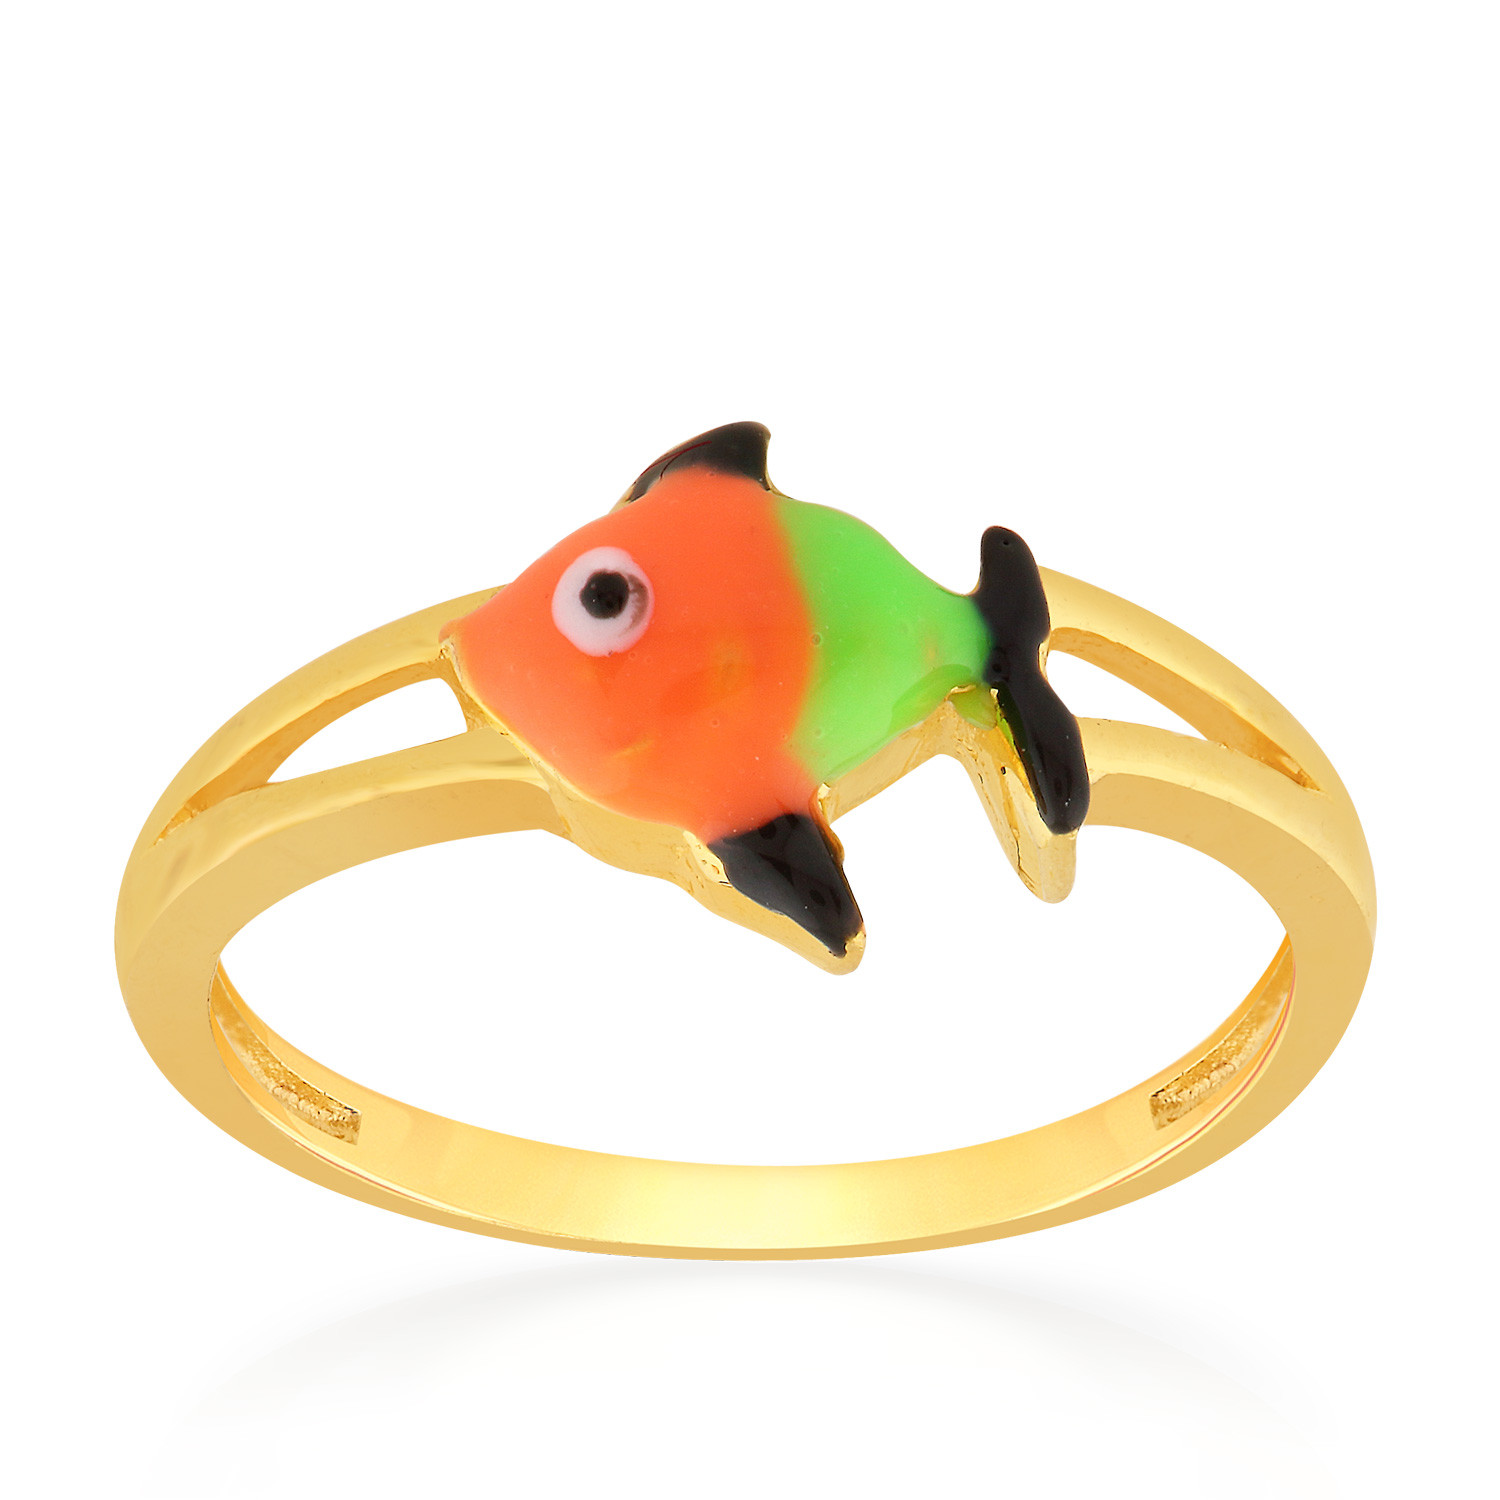 Starlet 22 KT Gold Studded Ring For Kids RGKDNOSG022